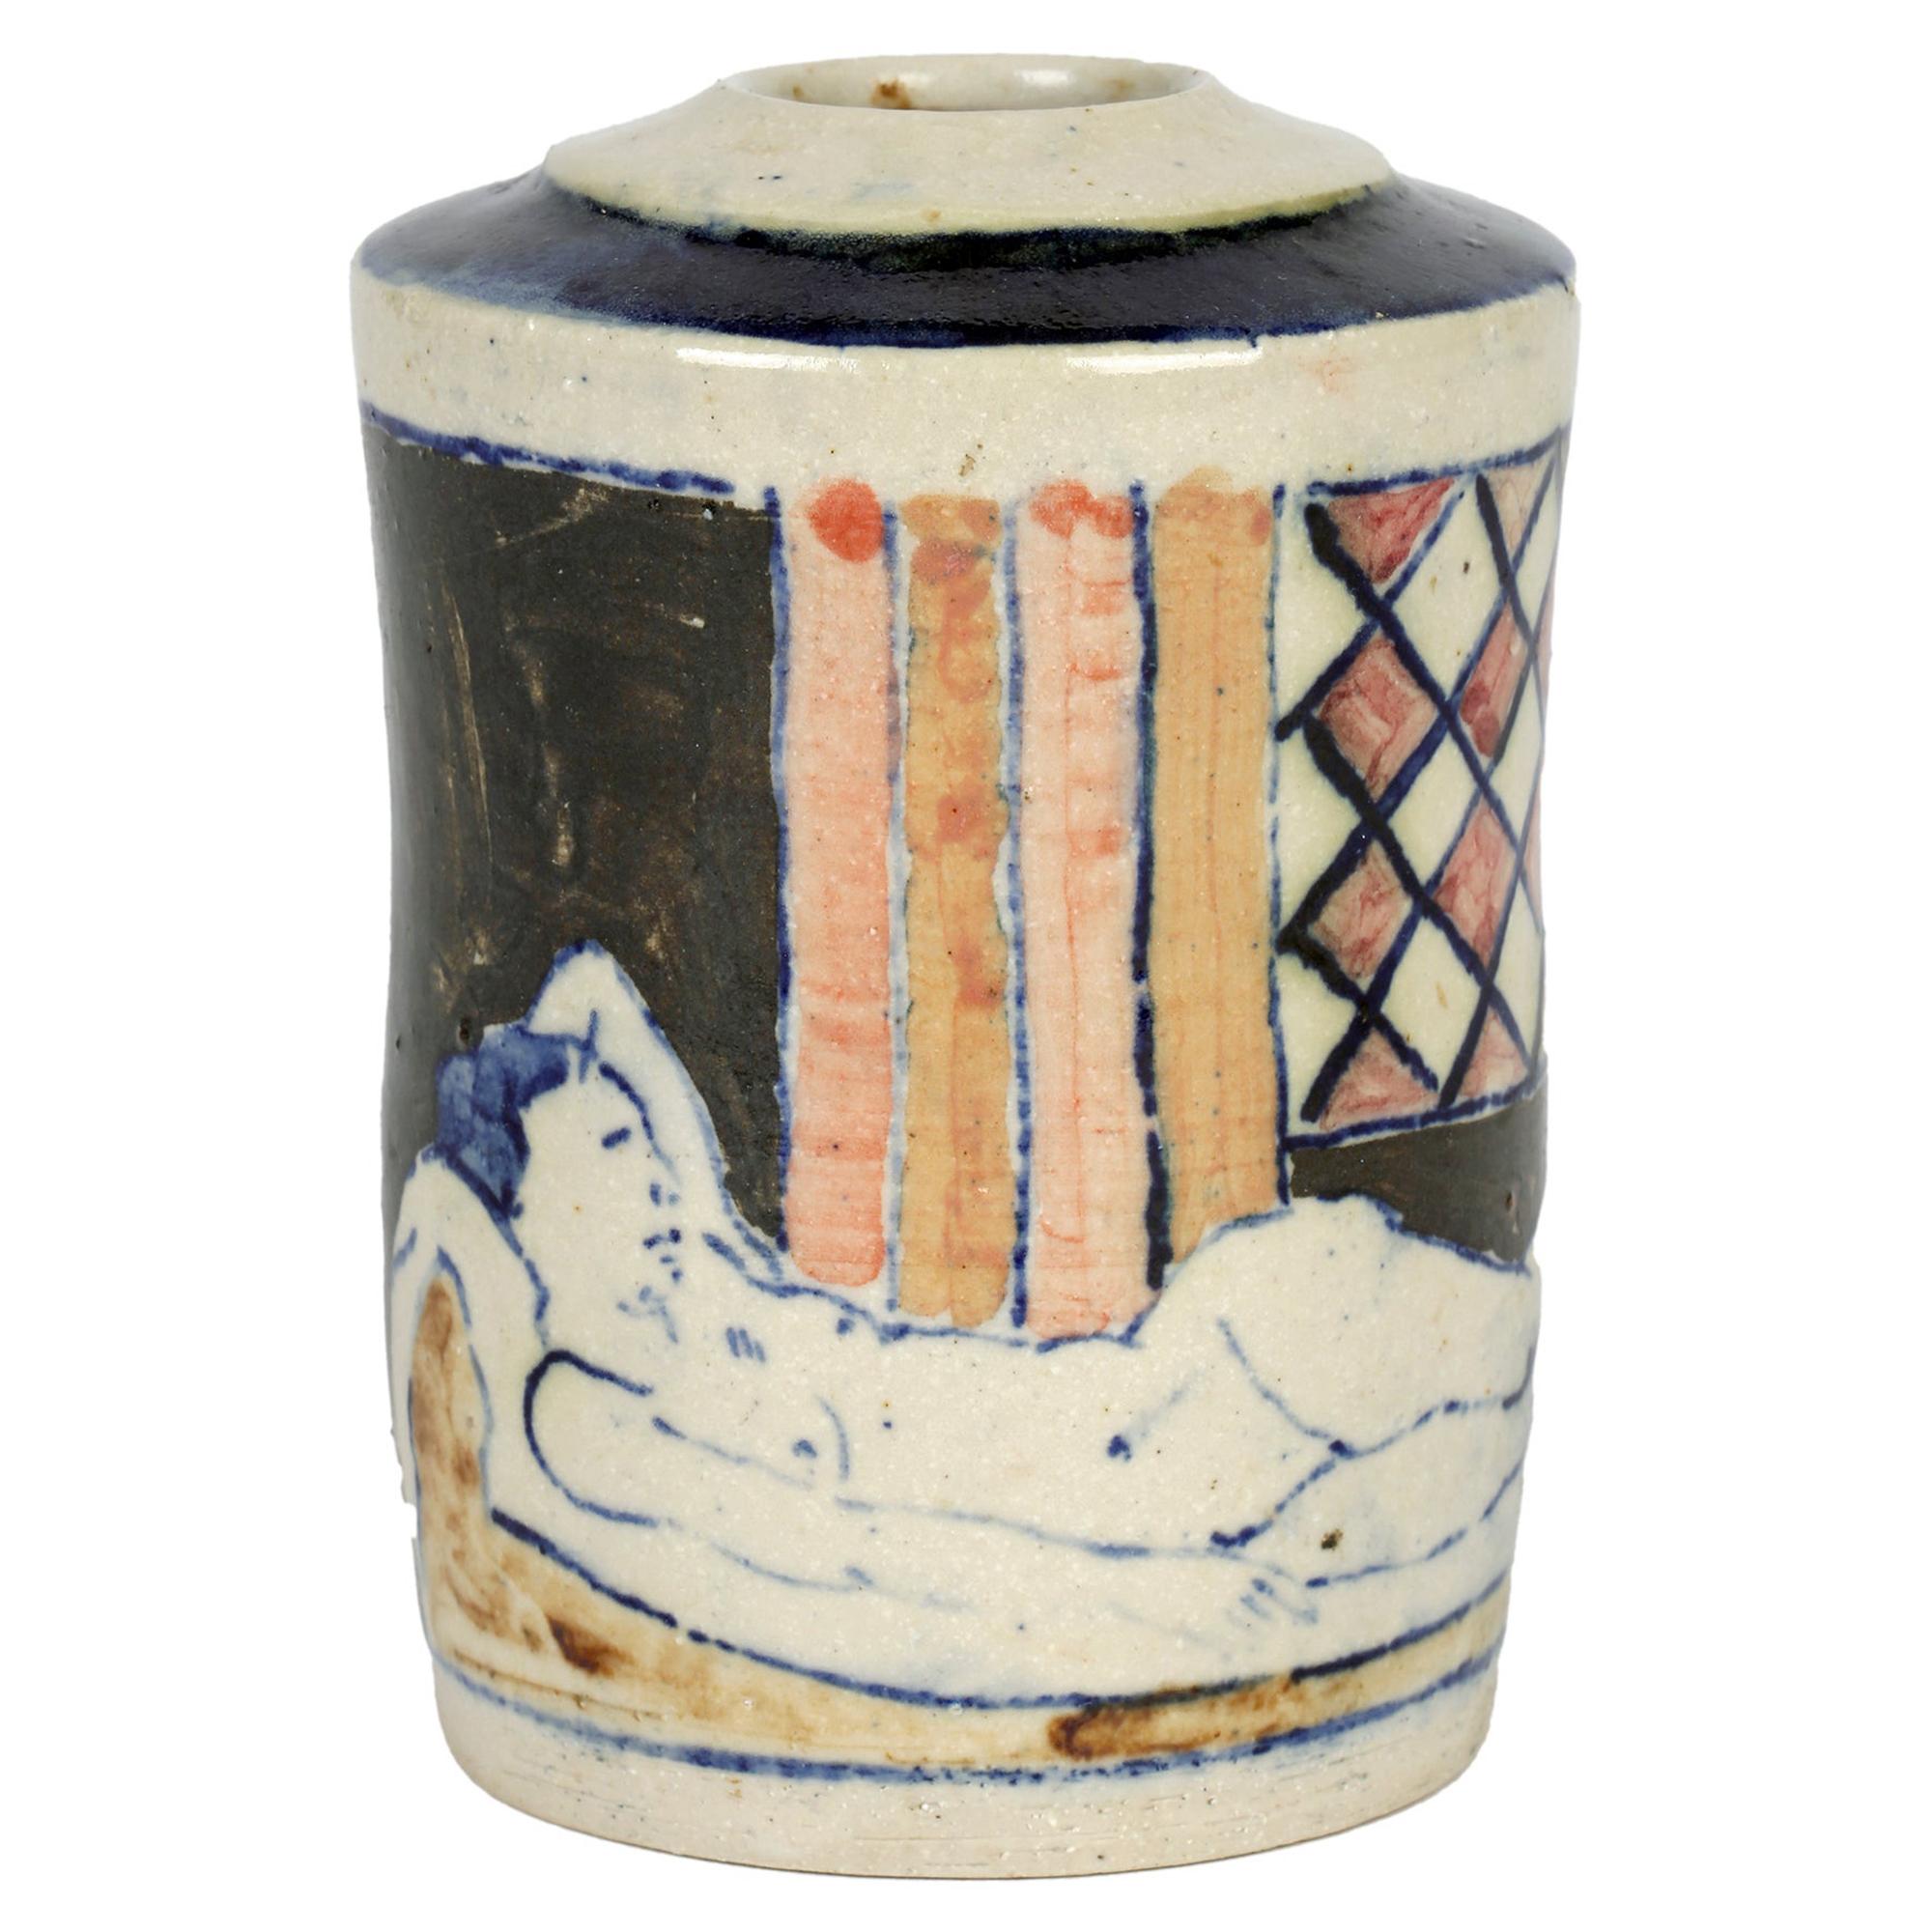 Eric James Mellon Studio Pottery Ash Glazed Vase with Nudes